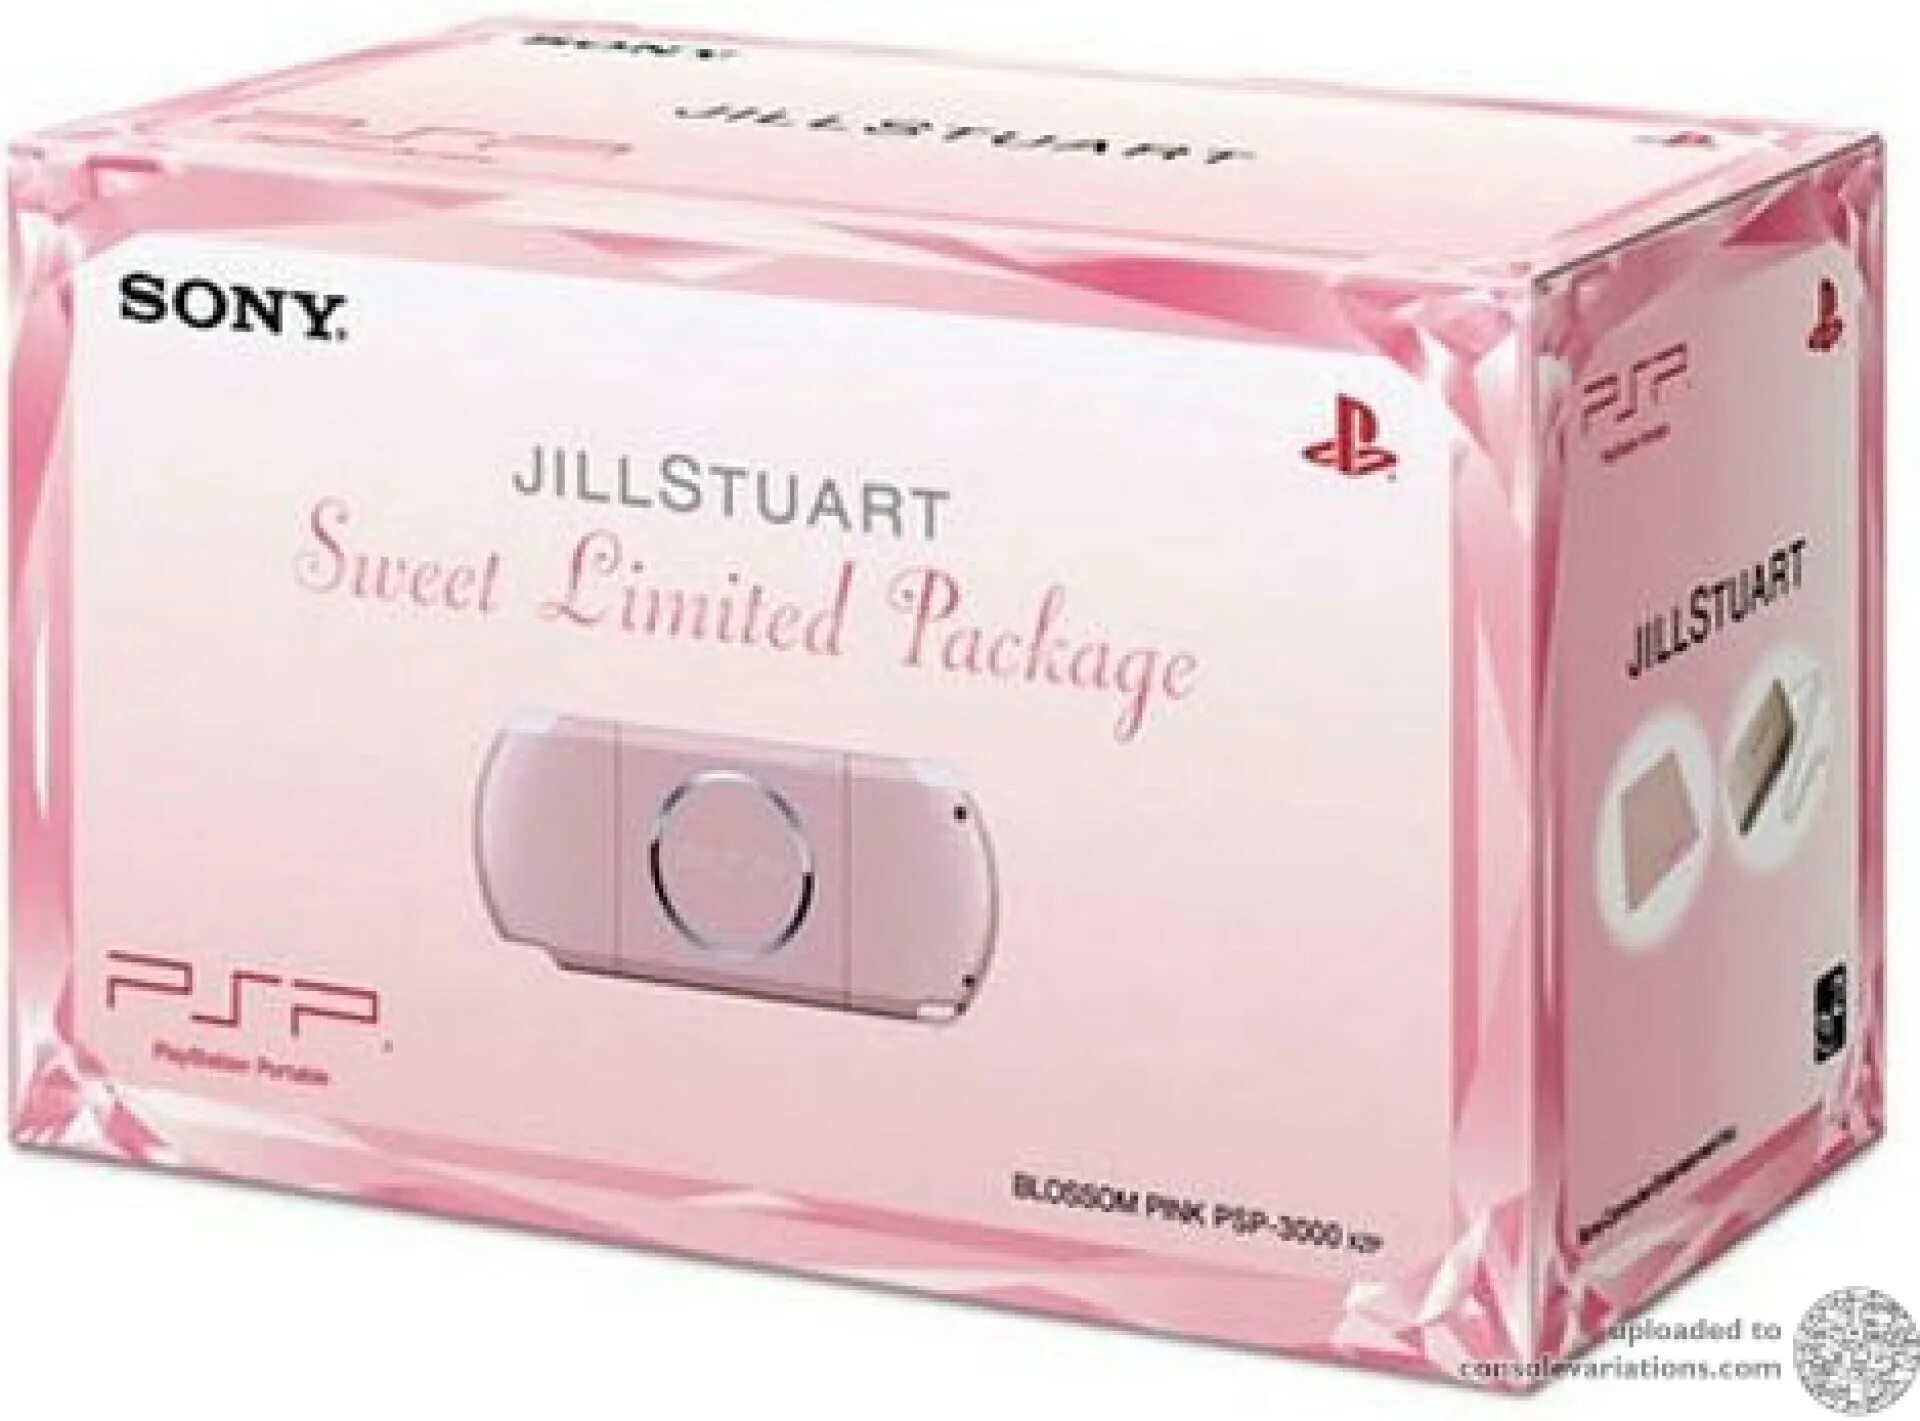 Blossom edition. Sony PSP 3000 Jill Stuart Sweet Limited packag. PSP 3000 Box. PSP 3000 Limited Edition. Sony PSP made in Japan.